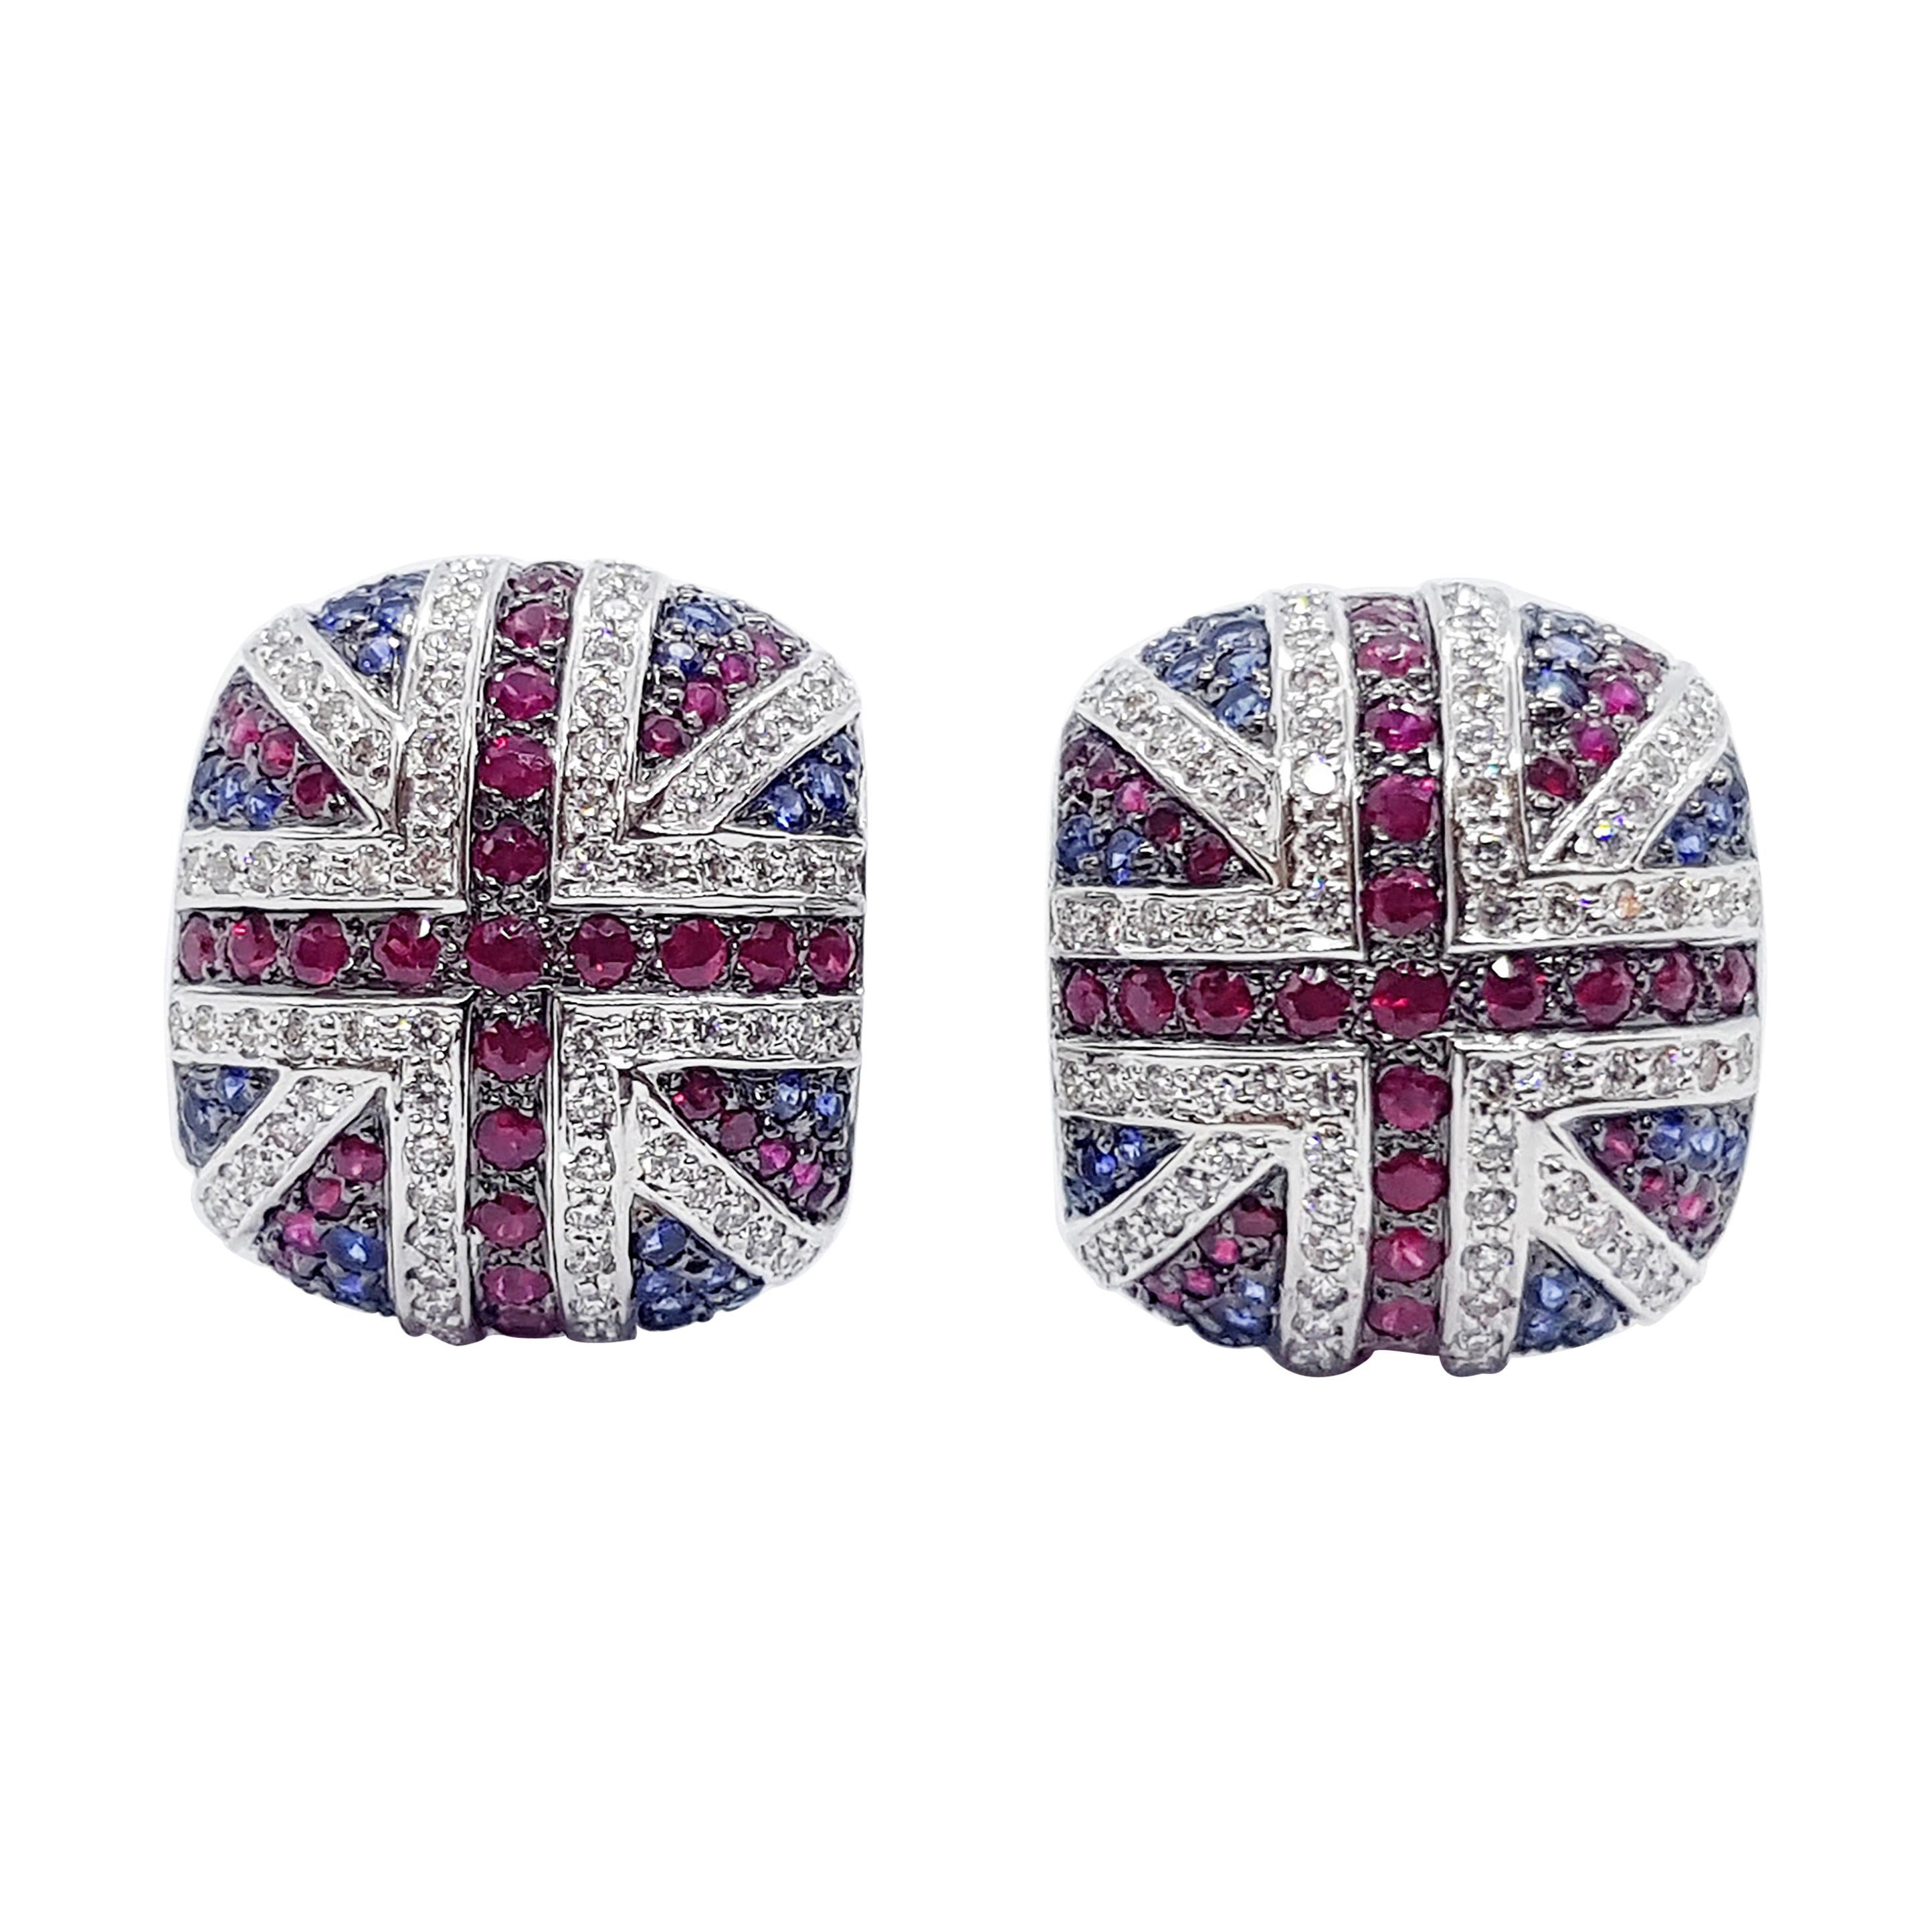 Ruby, Blue Sapphire and Diamond British Flag Earrings in 18 Karat White Gold